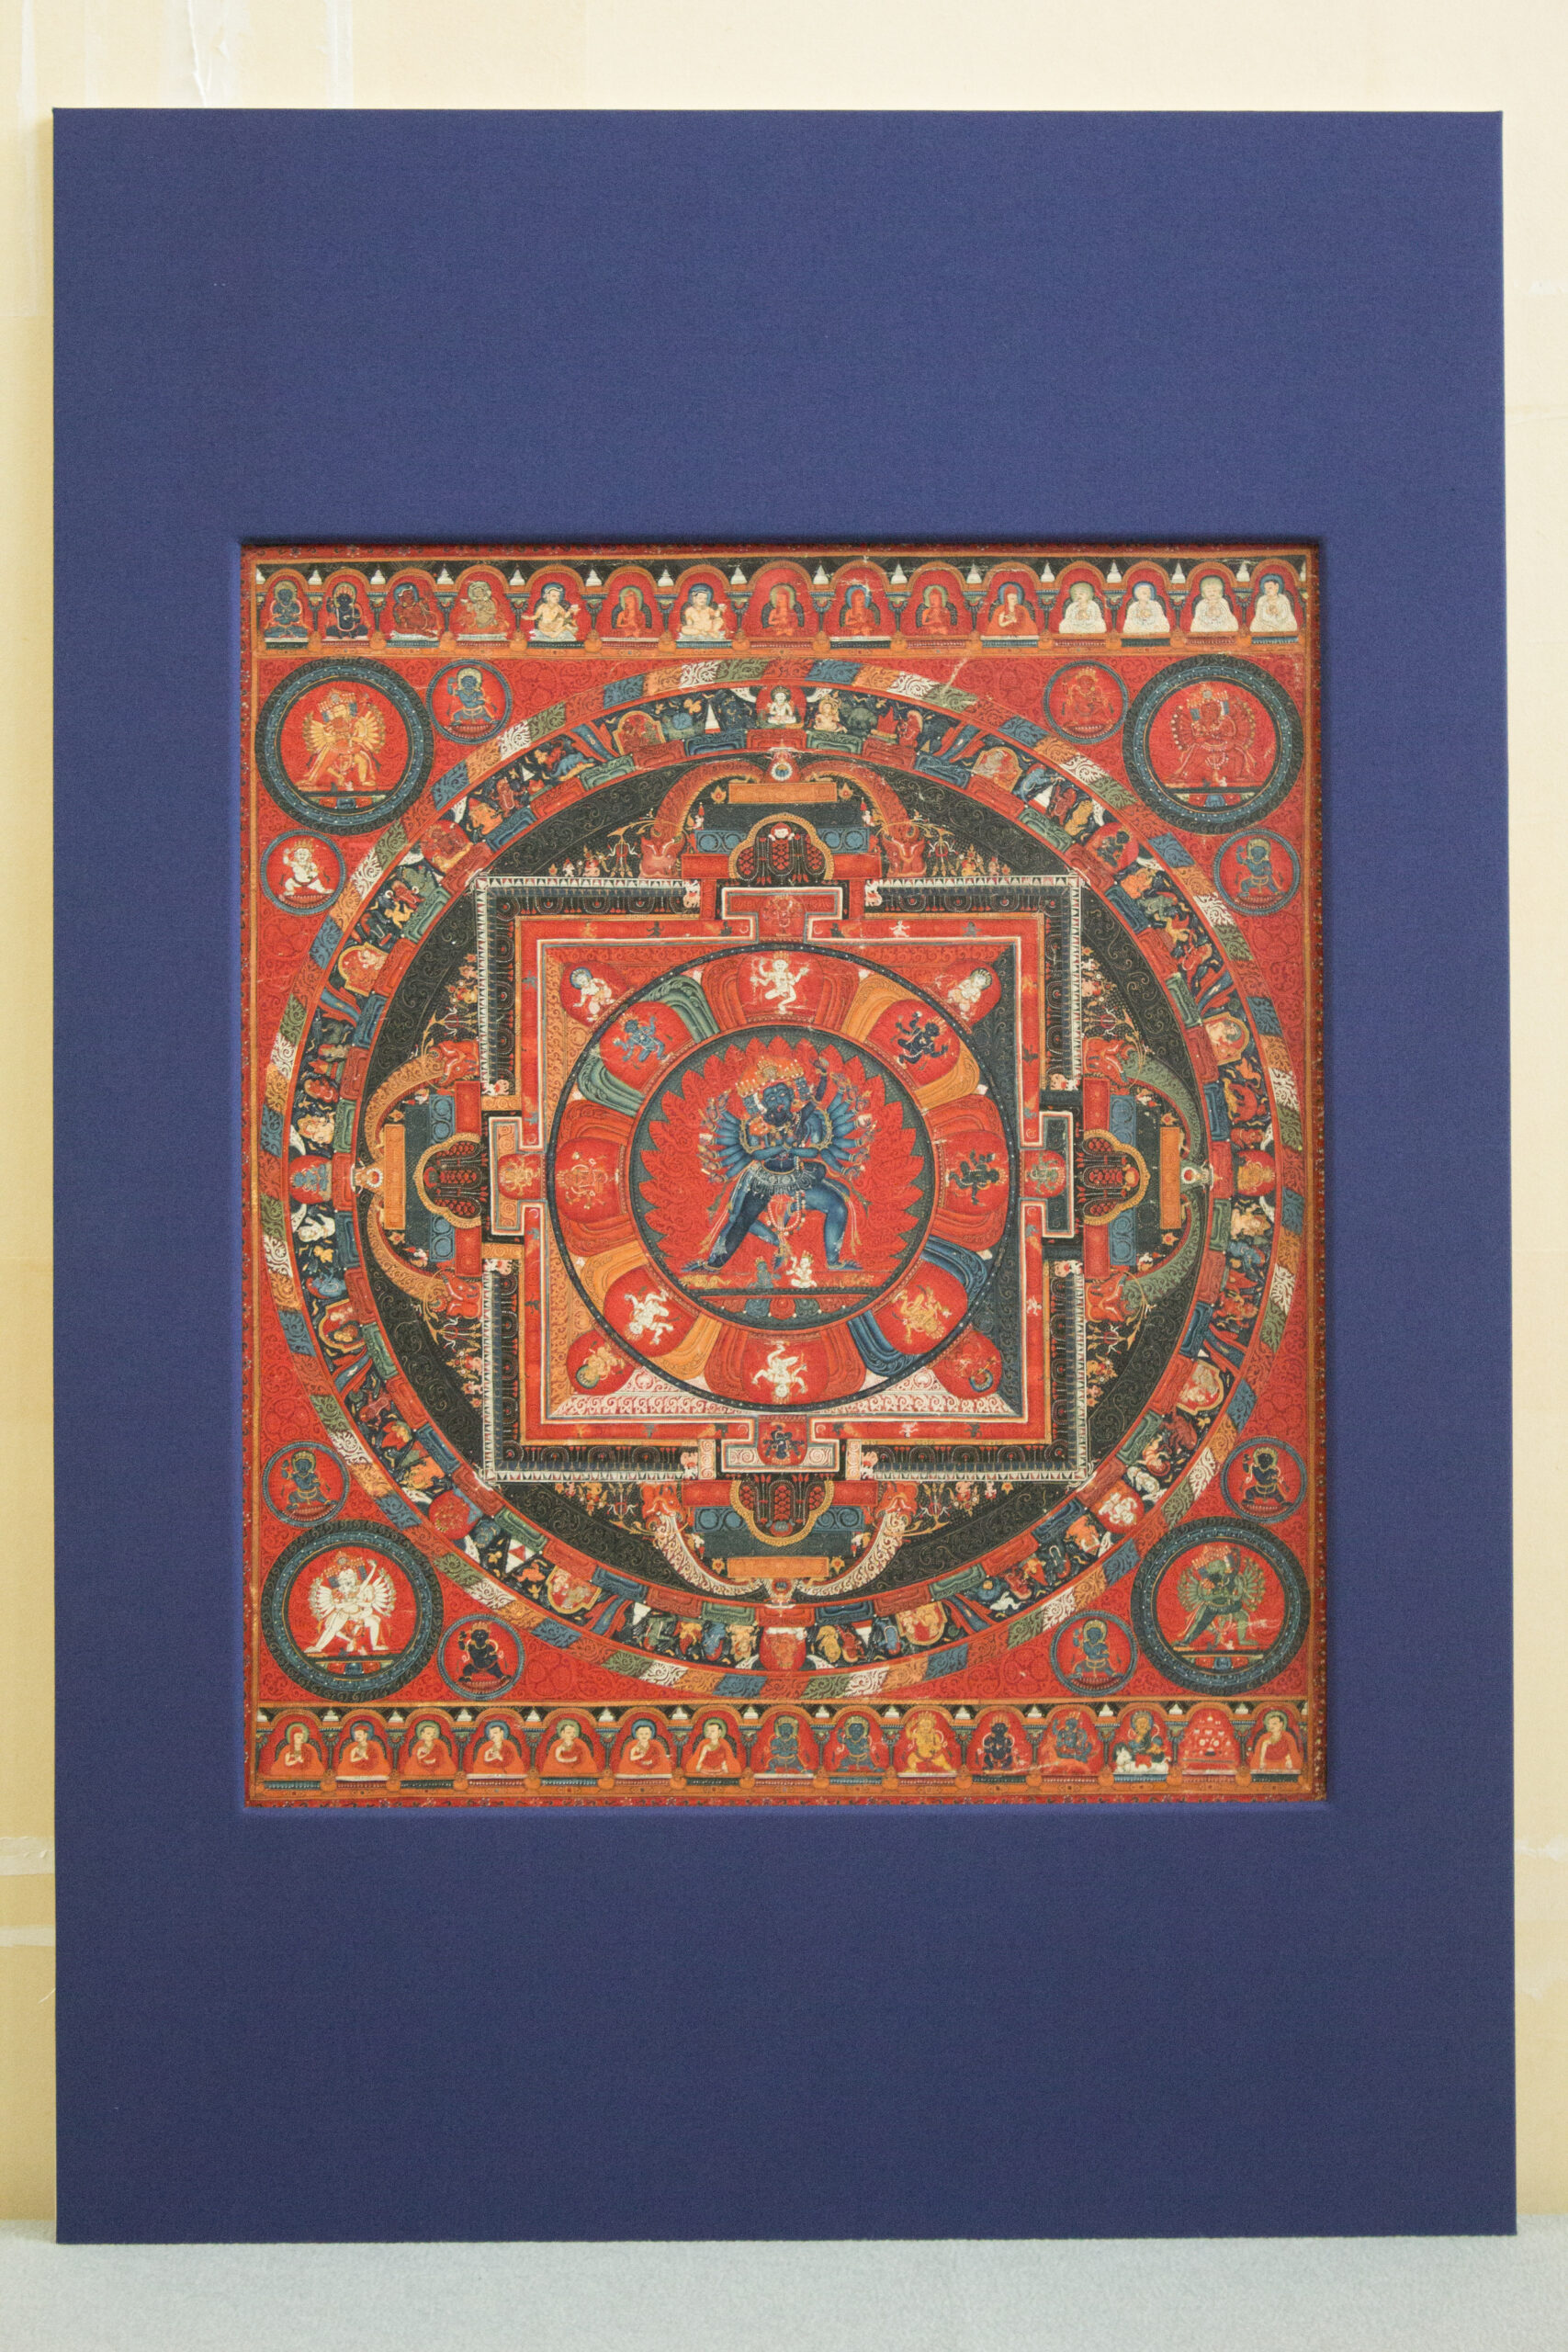 An image of a Mandala of Hevajra, from the Sakya School c. 16th century